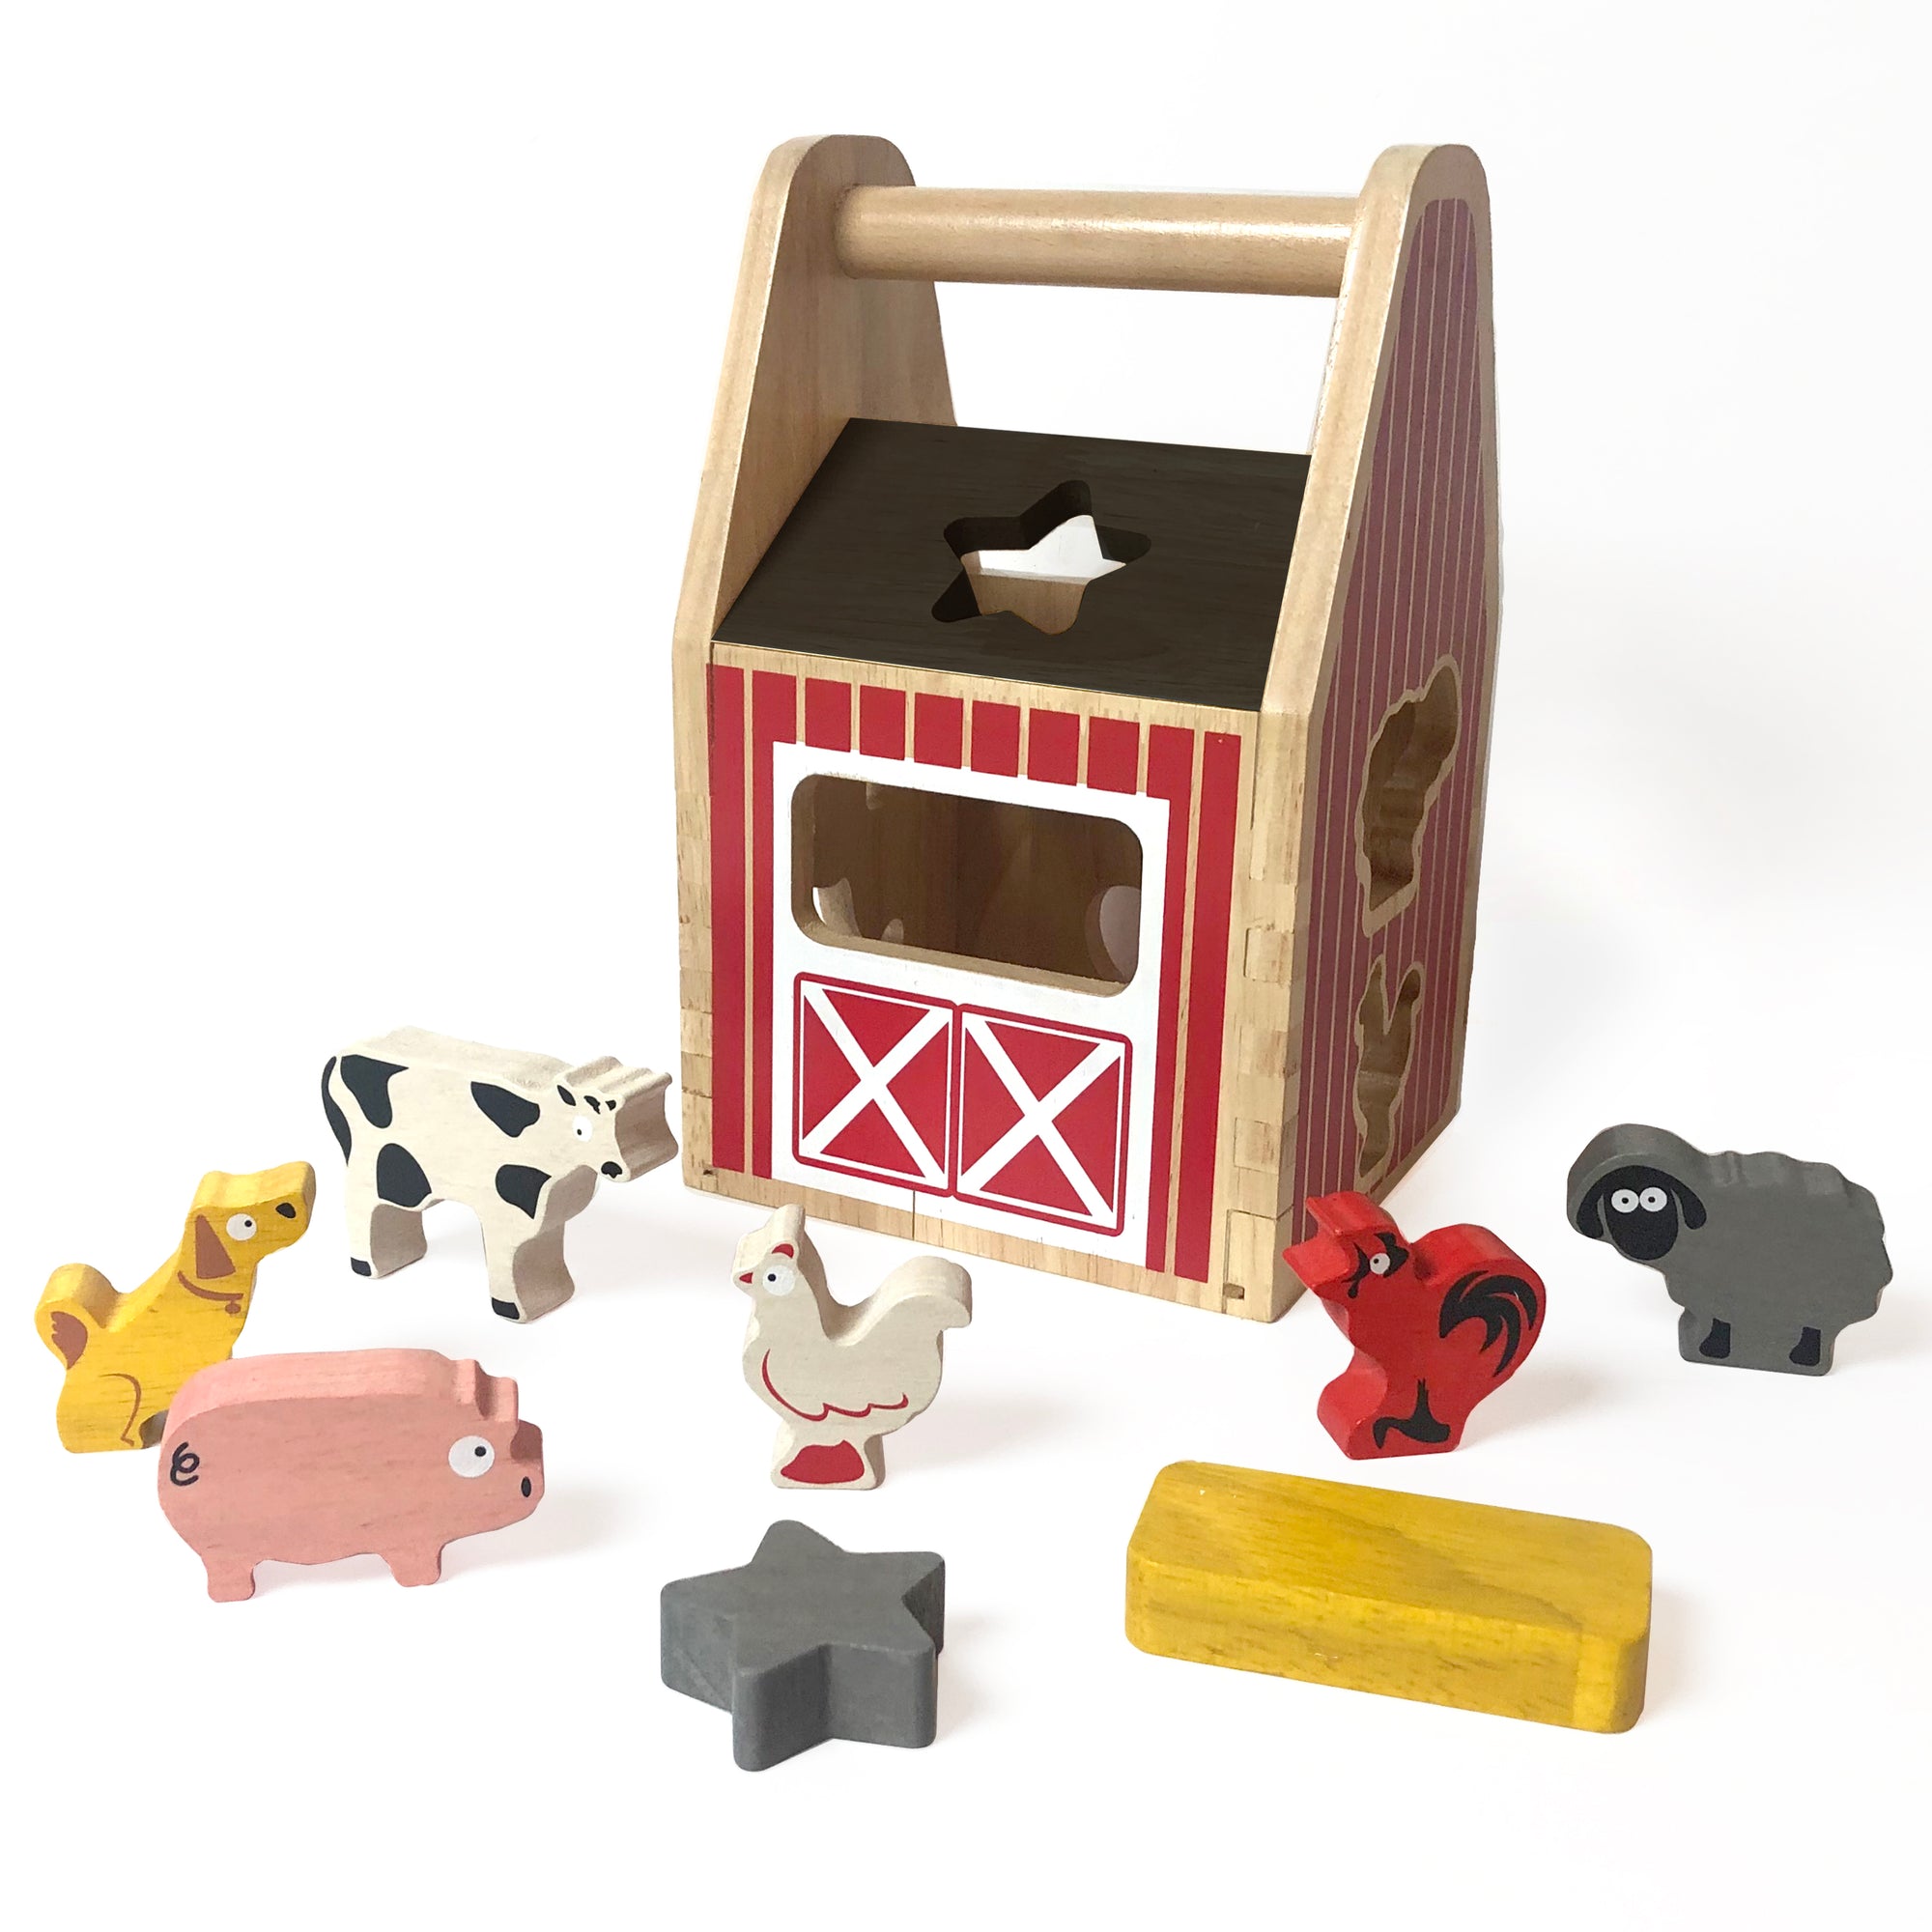 Puzzle Sorter - The Granville Island Toy Company